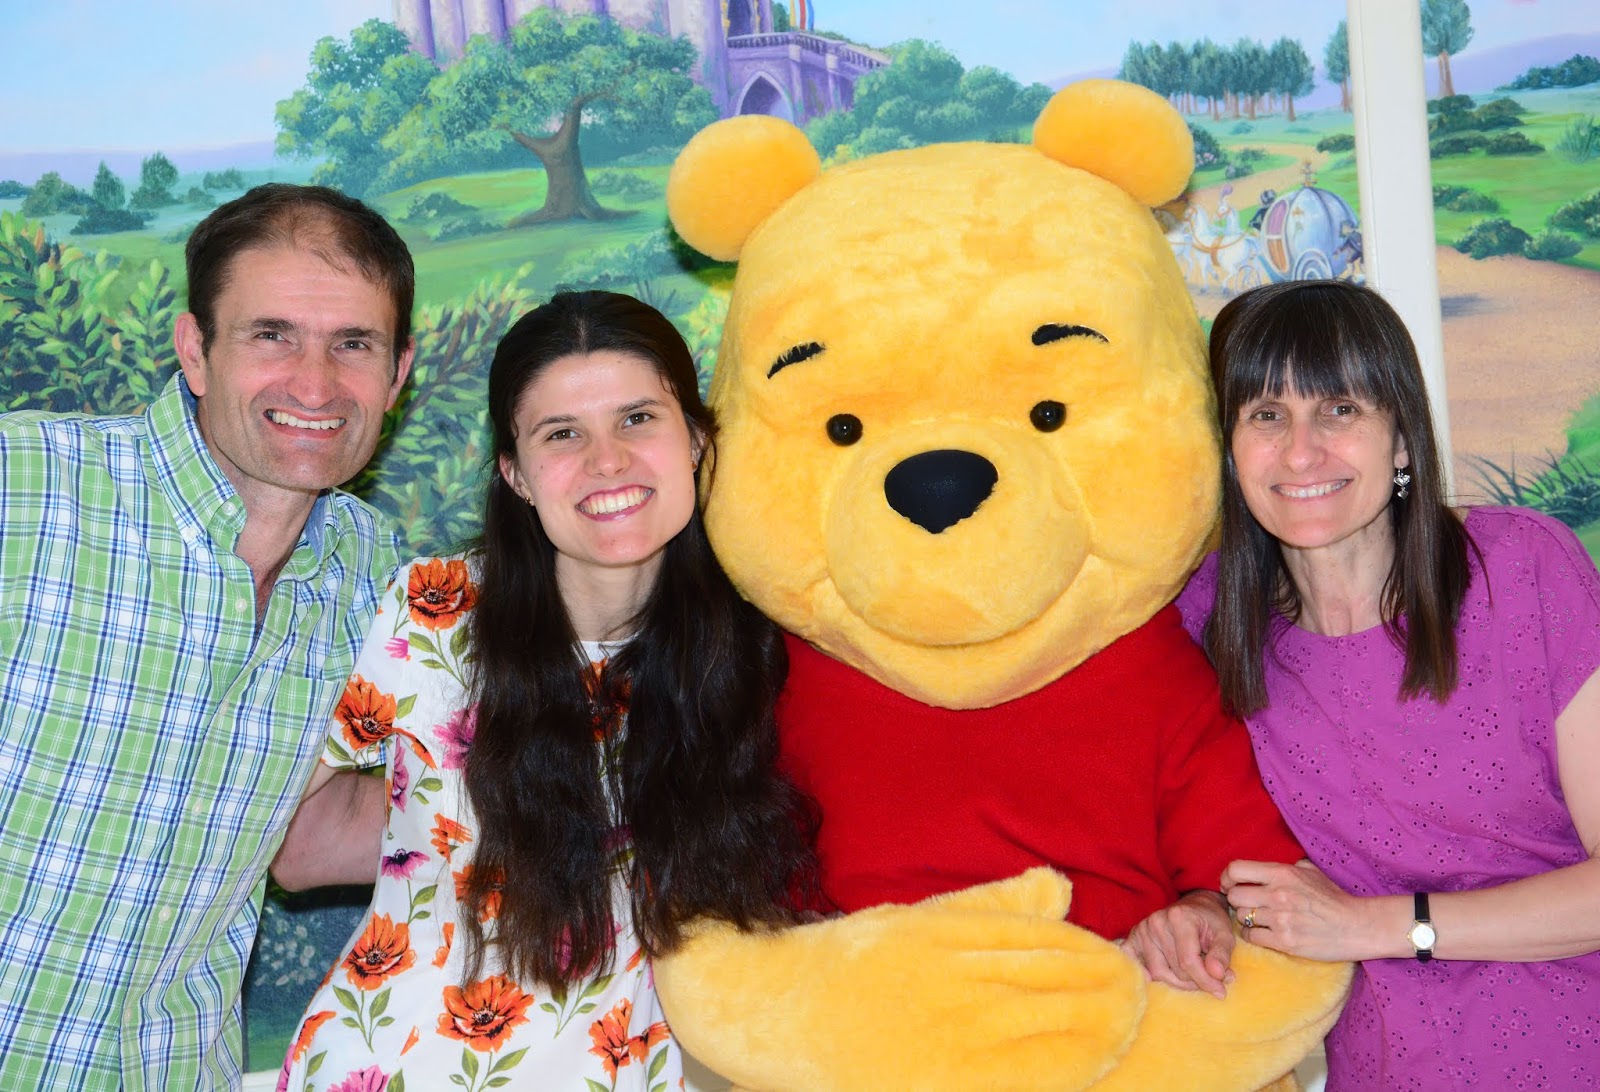 Meeting Winnie the Pooh at Walt Disney World in Florida